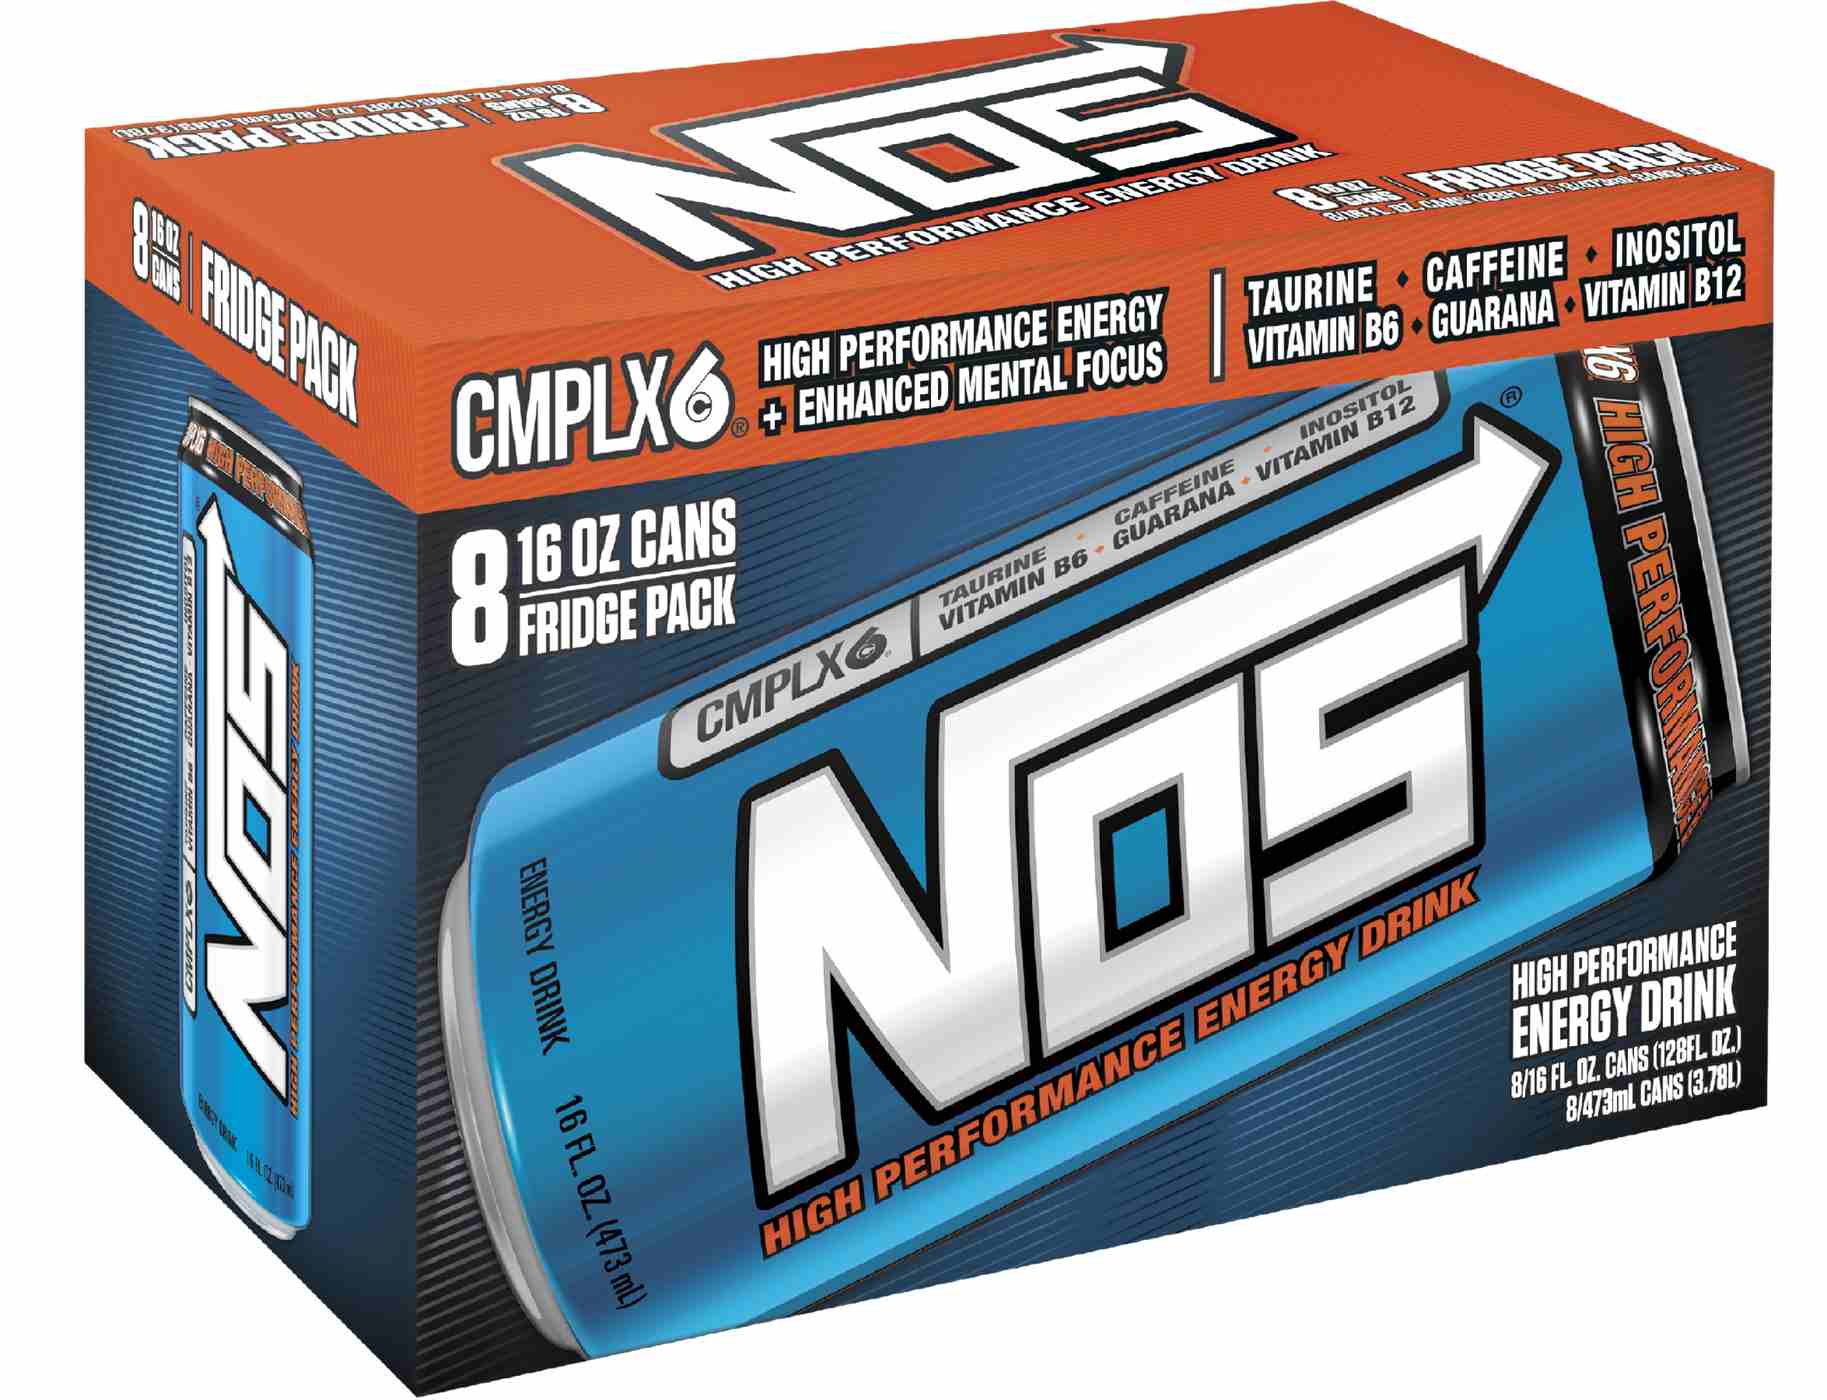 NOS Original Energy Drink 16 oz Cans; image 2 of 2